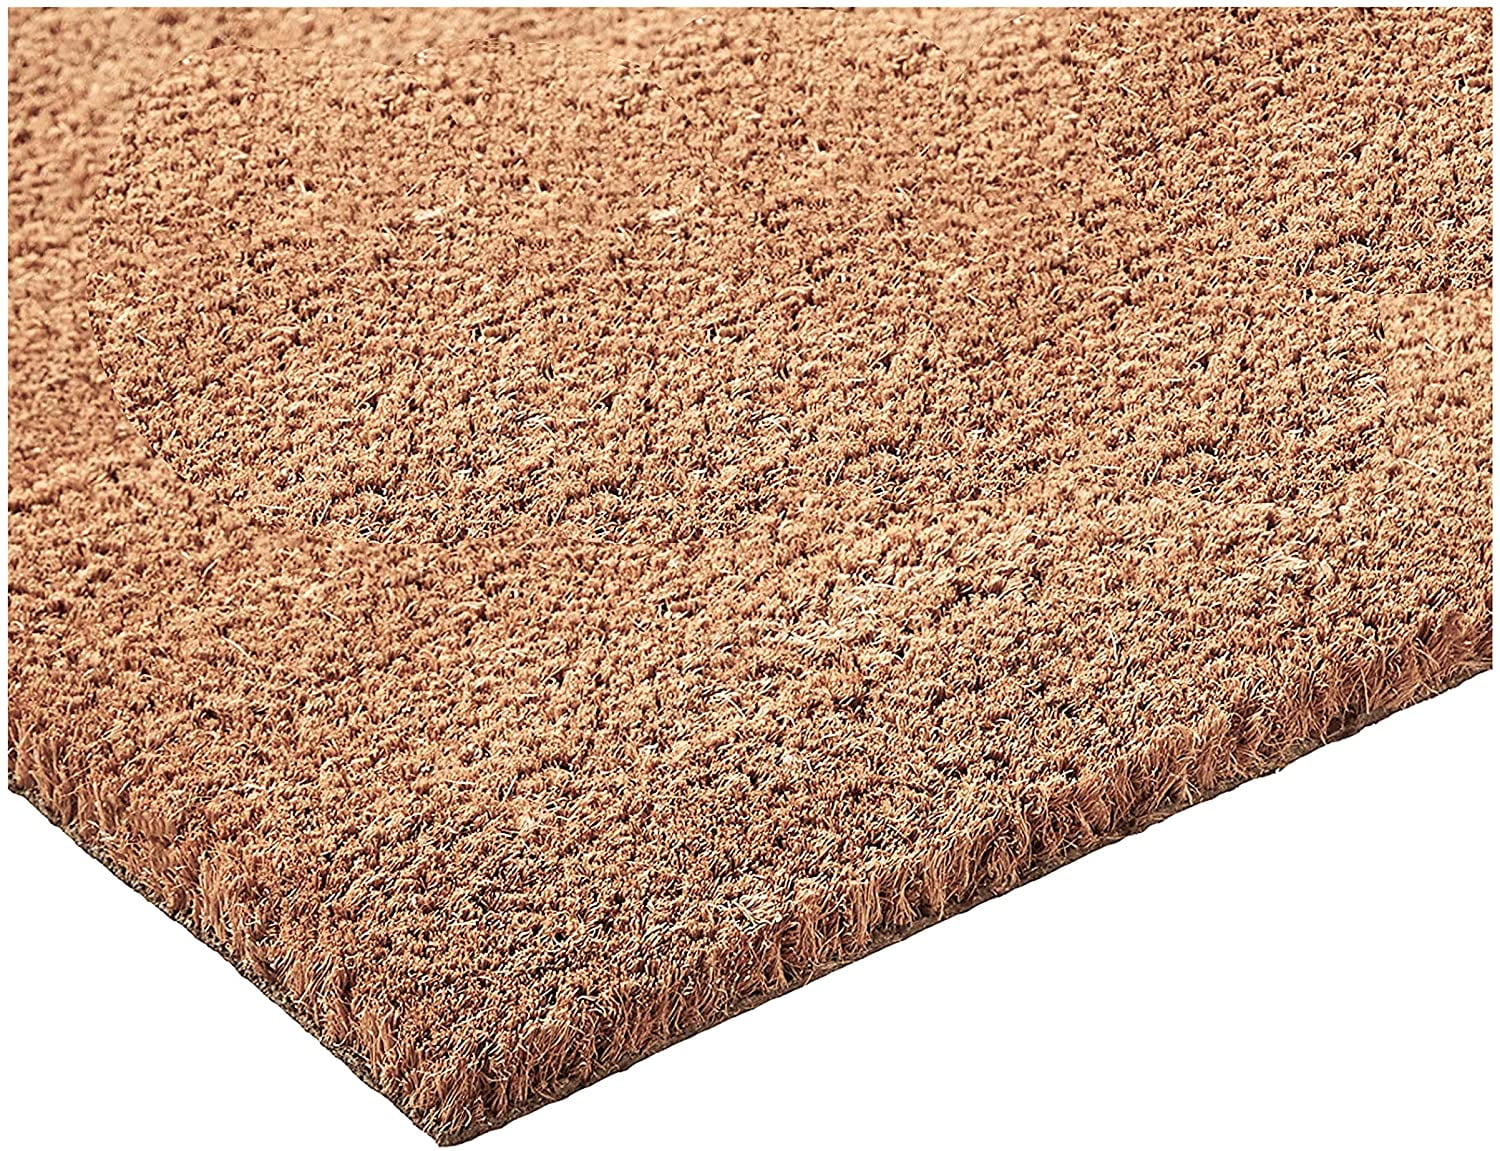 2' x 3' Keep the Change You Filthy Animal Holiday Doormat - FloorMatShop -  Commercial Floor Matting & Custom Logo Mats